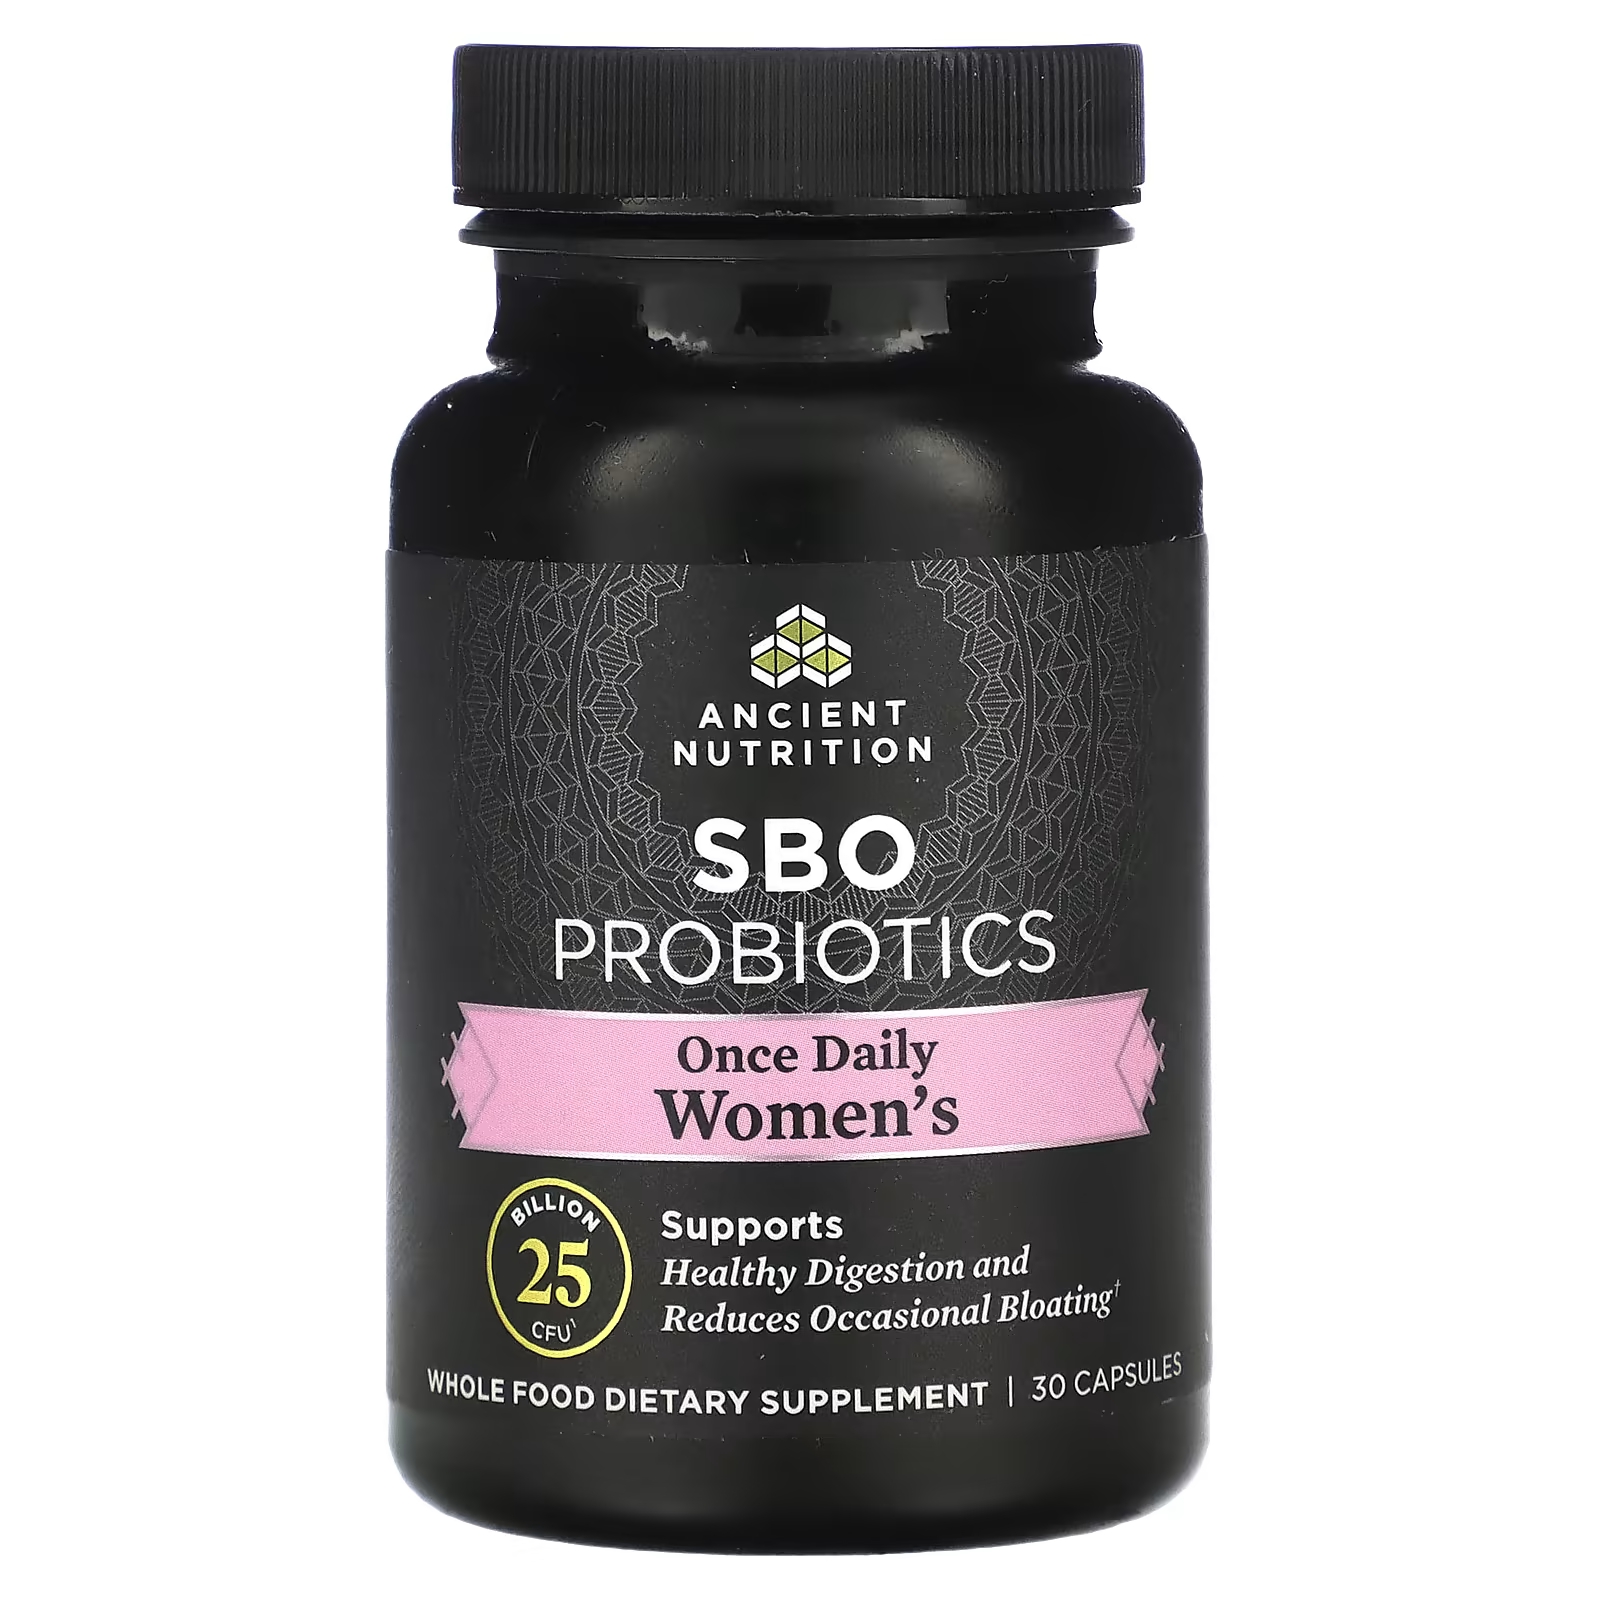 Ancient Nutrition SBO Пробиотики для женщин один раз в день, 25 миллиардов КОЕ, 30 капсул azo complete feminine balance daily probiotic 5 миллиардов 60 капсул один раз в день